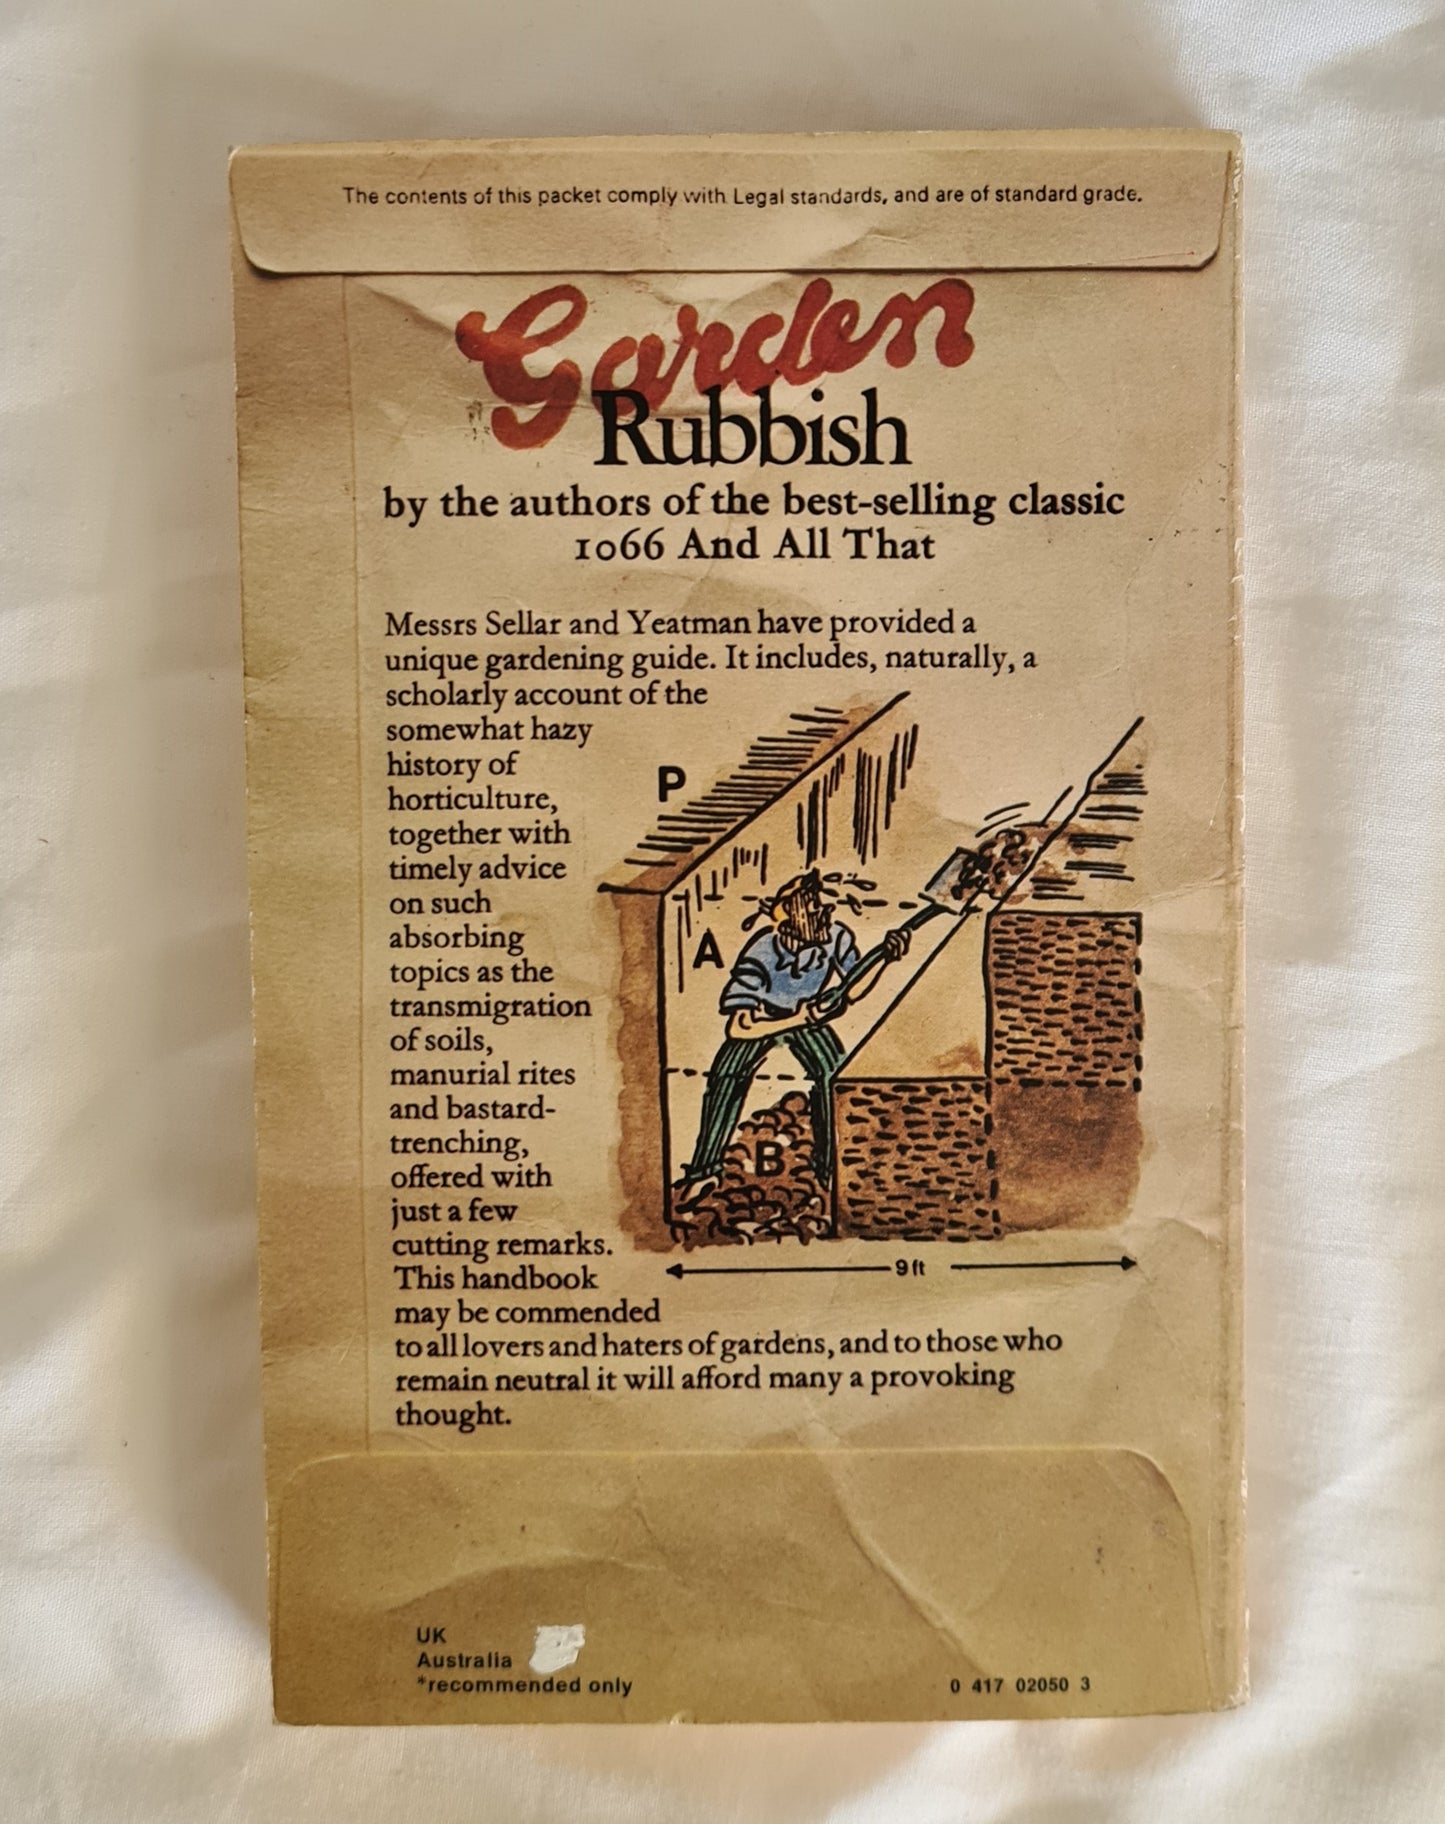 Garden Rubbish by W. C. Sellar and R. J. Yeatman